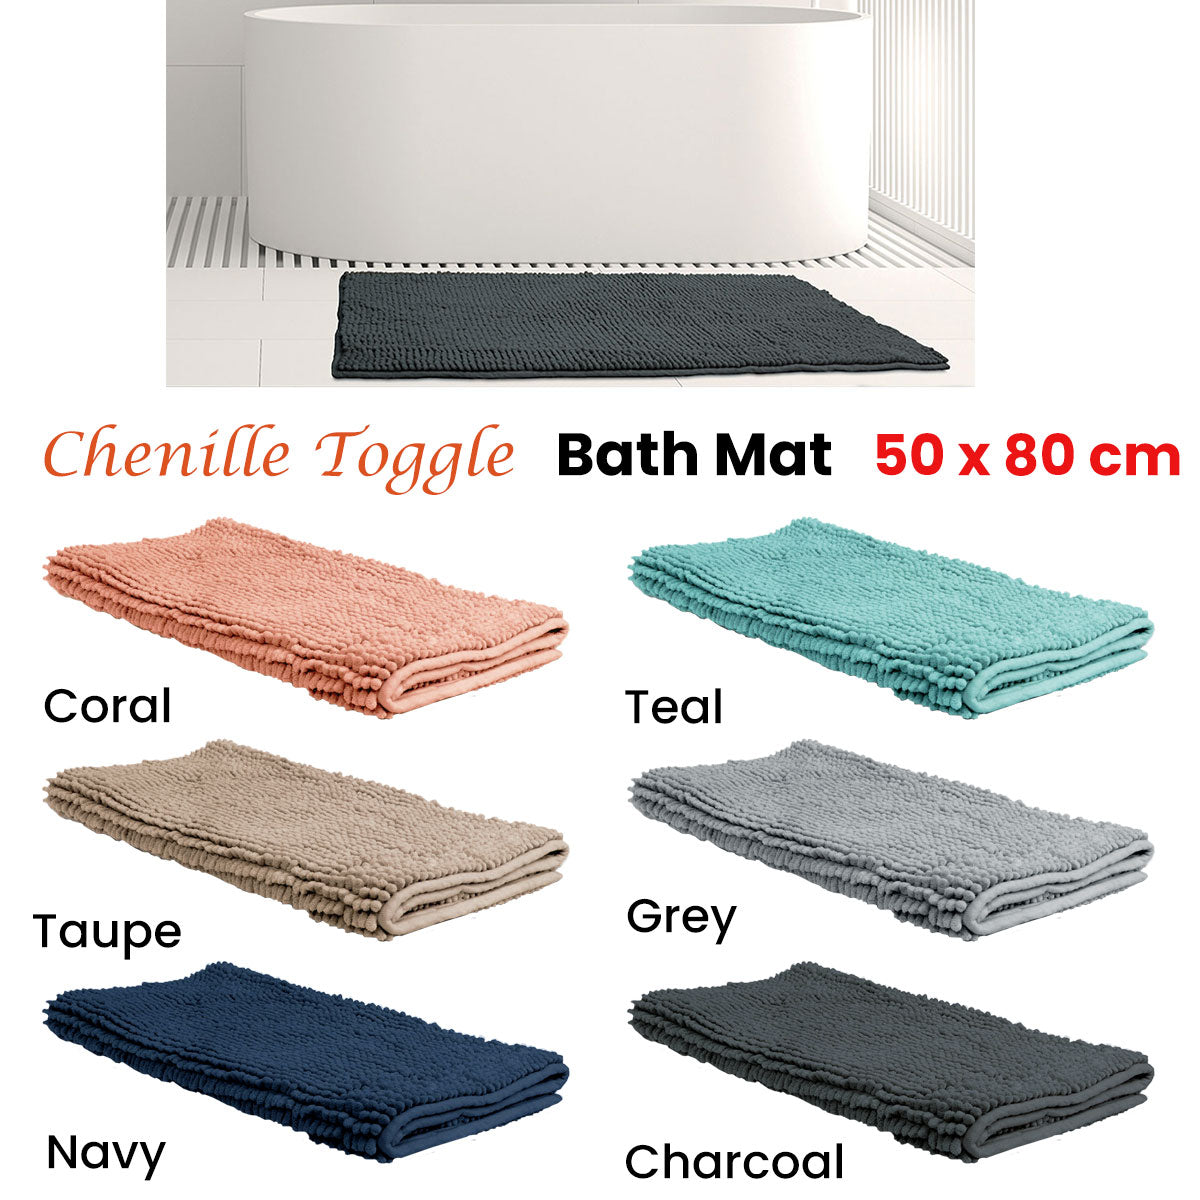 Chenille Toggle Bath Mat 50 x 80cm Grey - BM House & Garden